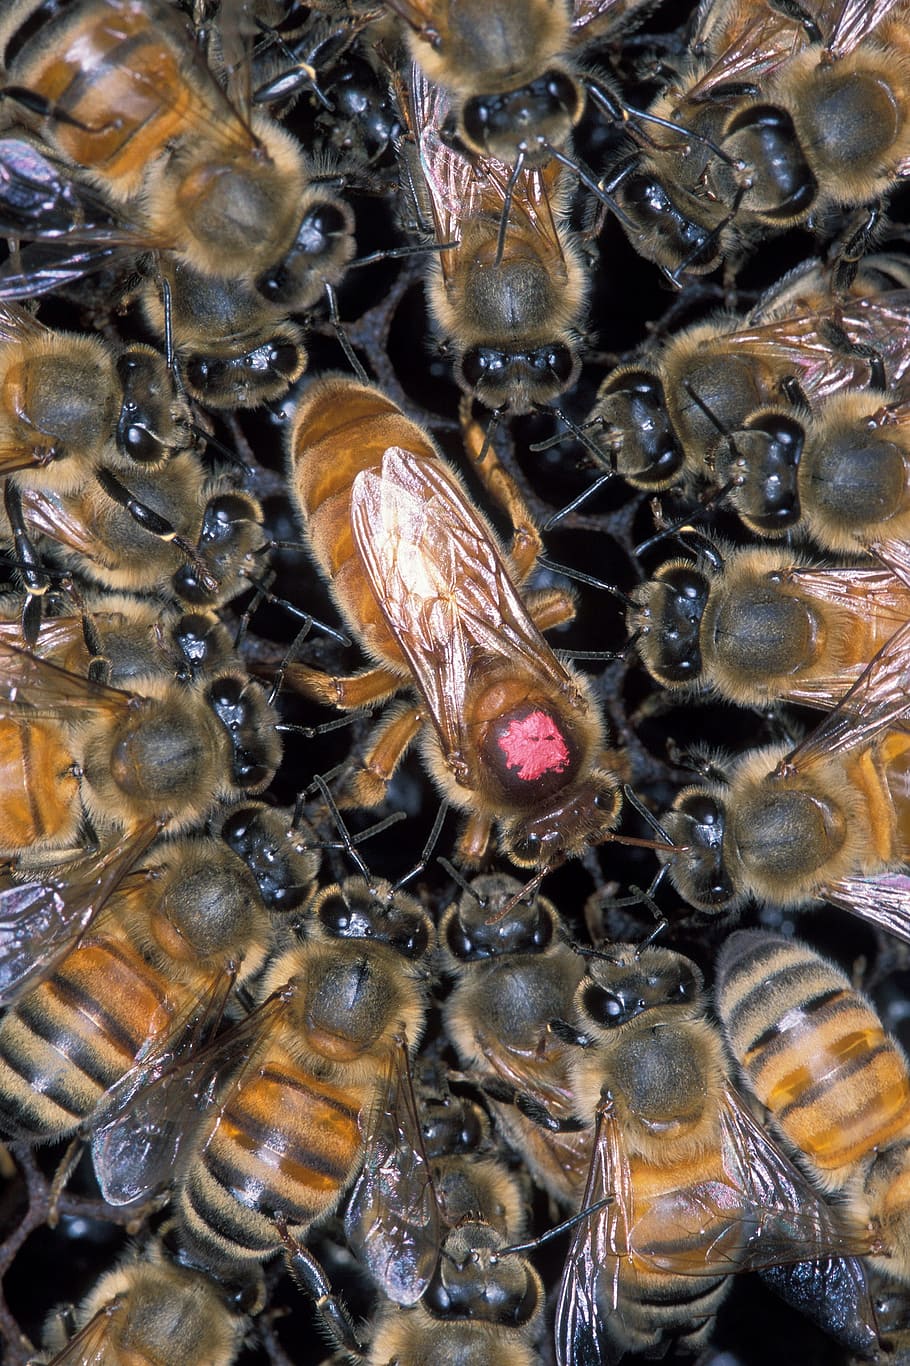 primer plano, foto, abejas, abeja africana, colmena, reina, trabajadores, peine, miel, apicultura